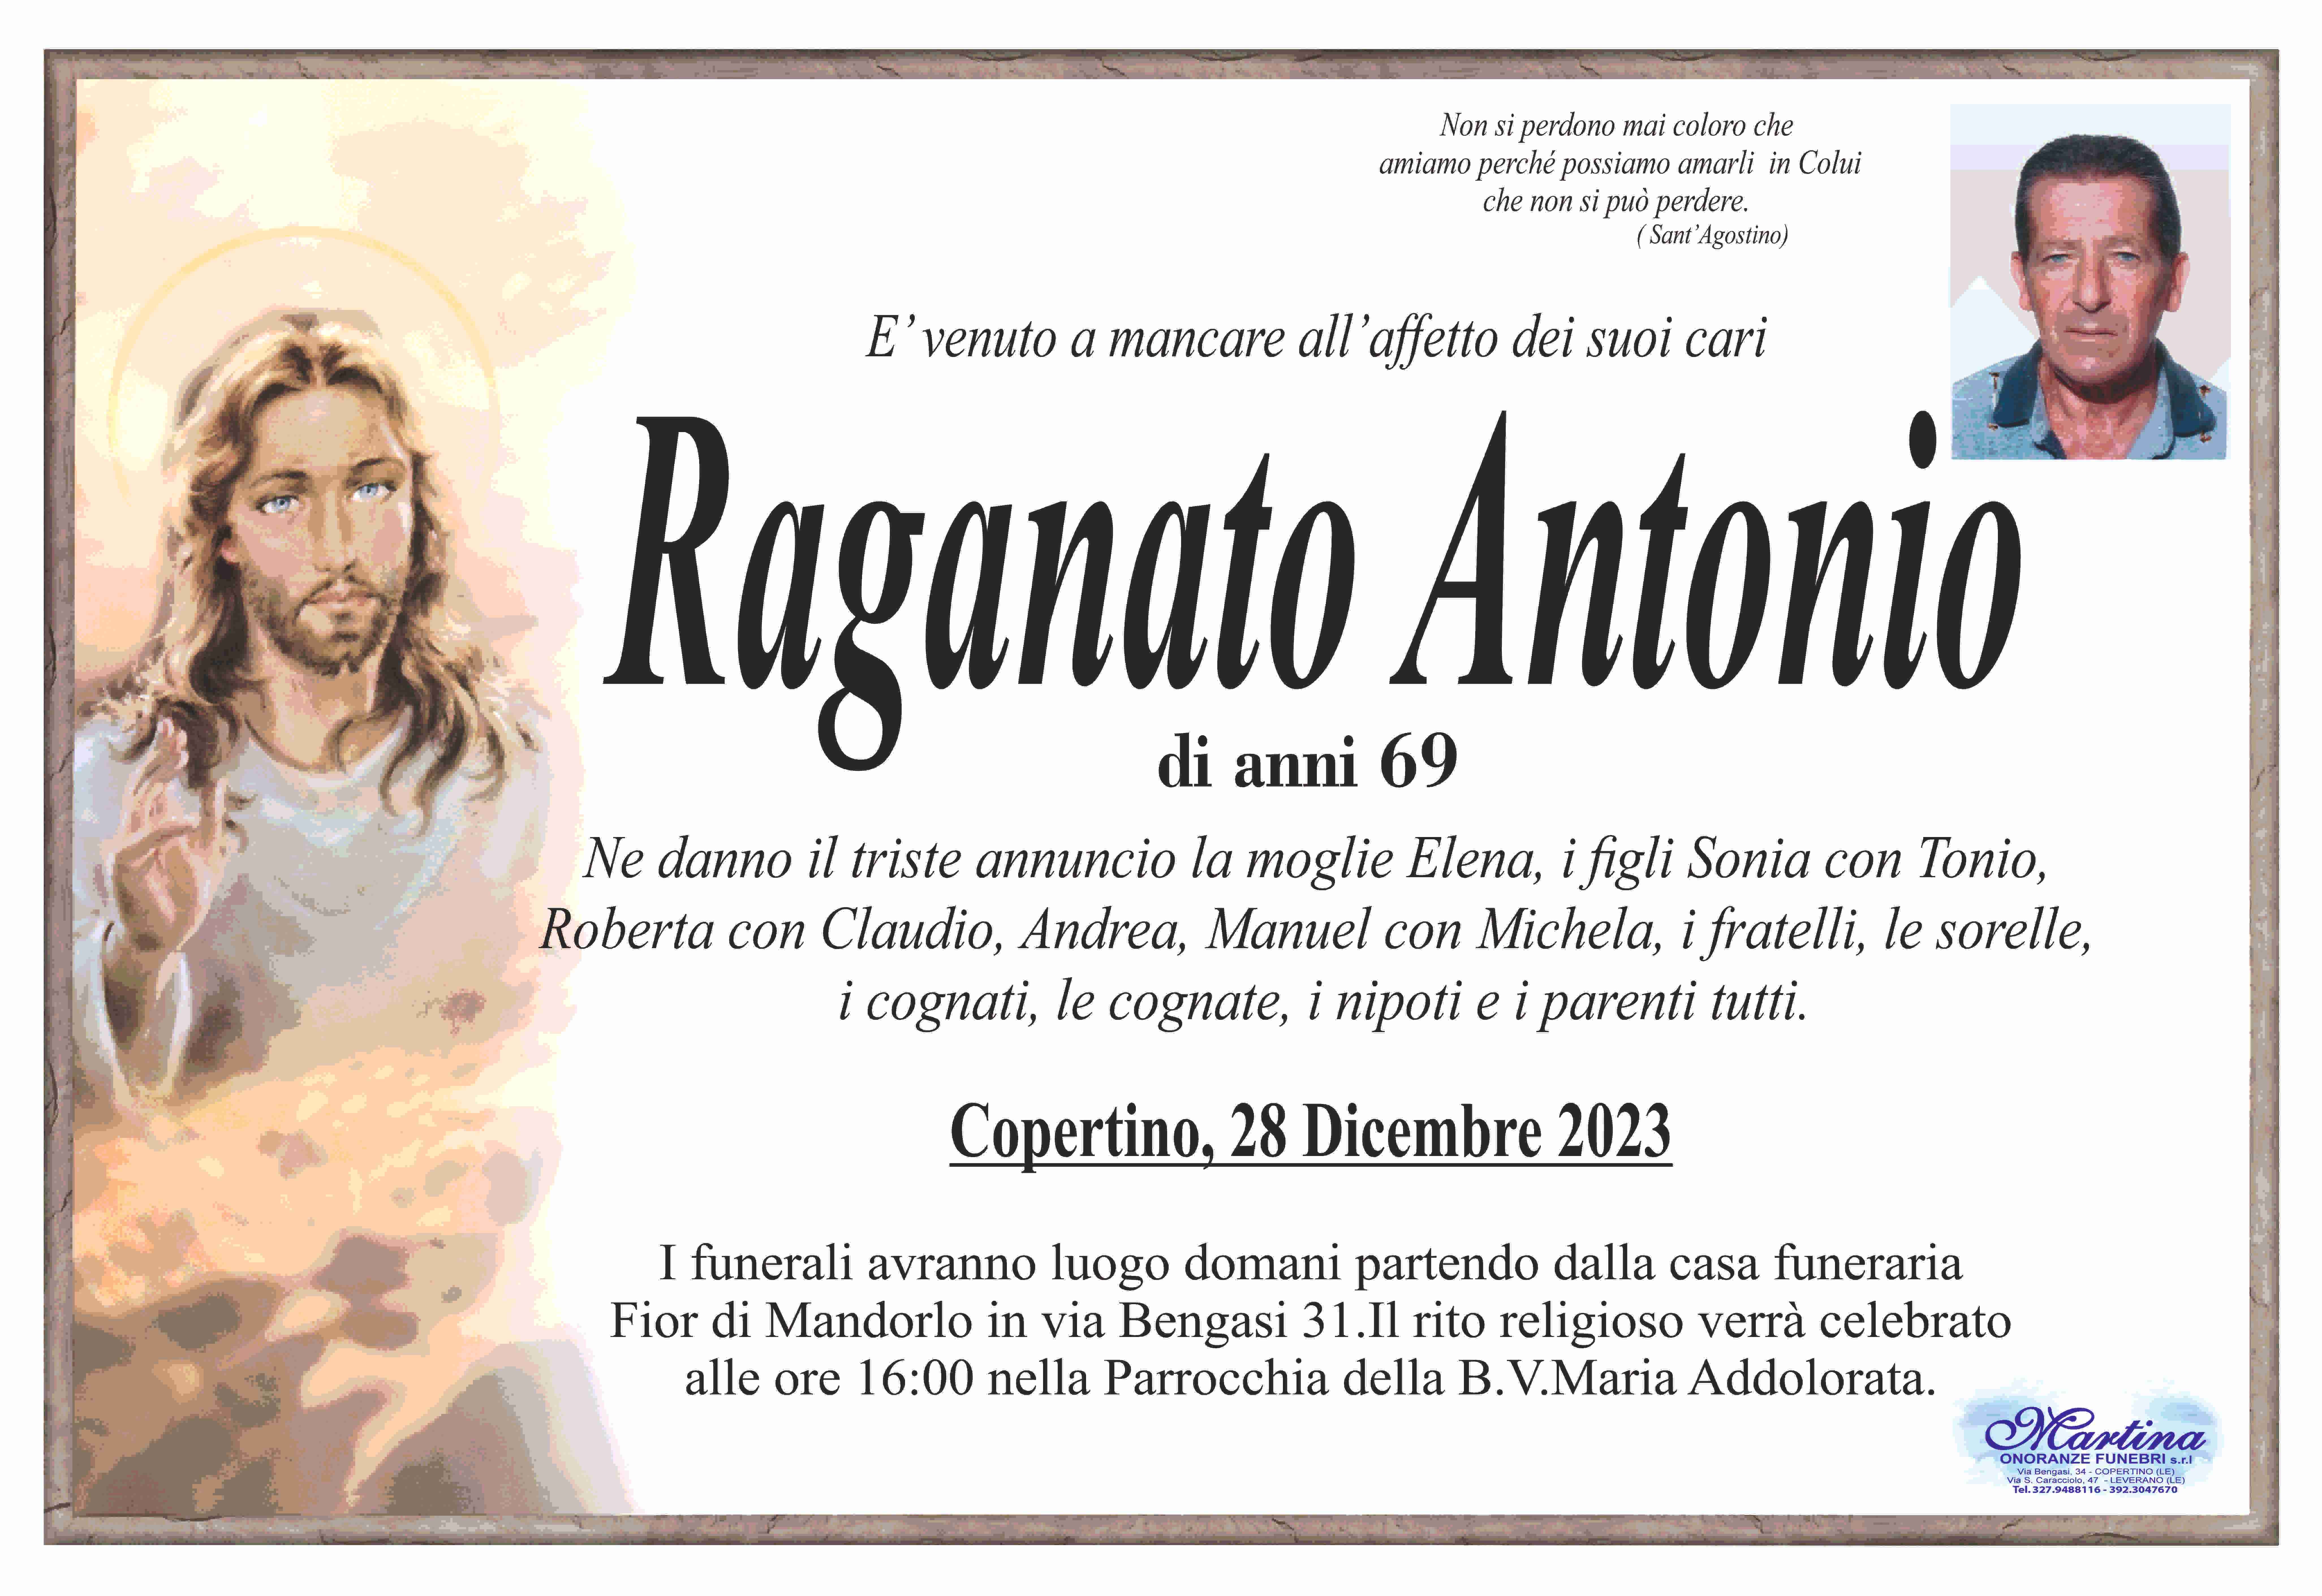 Antonio Raganato